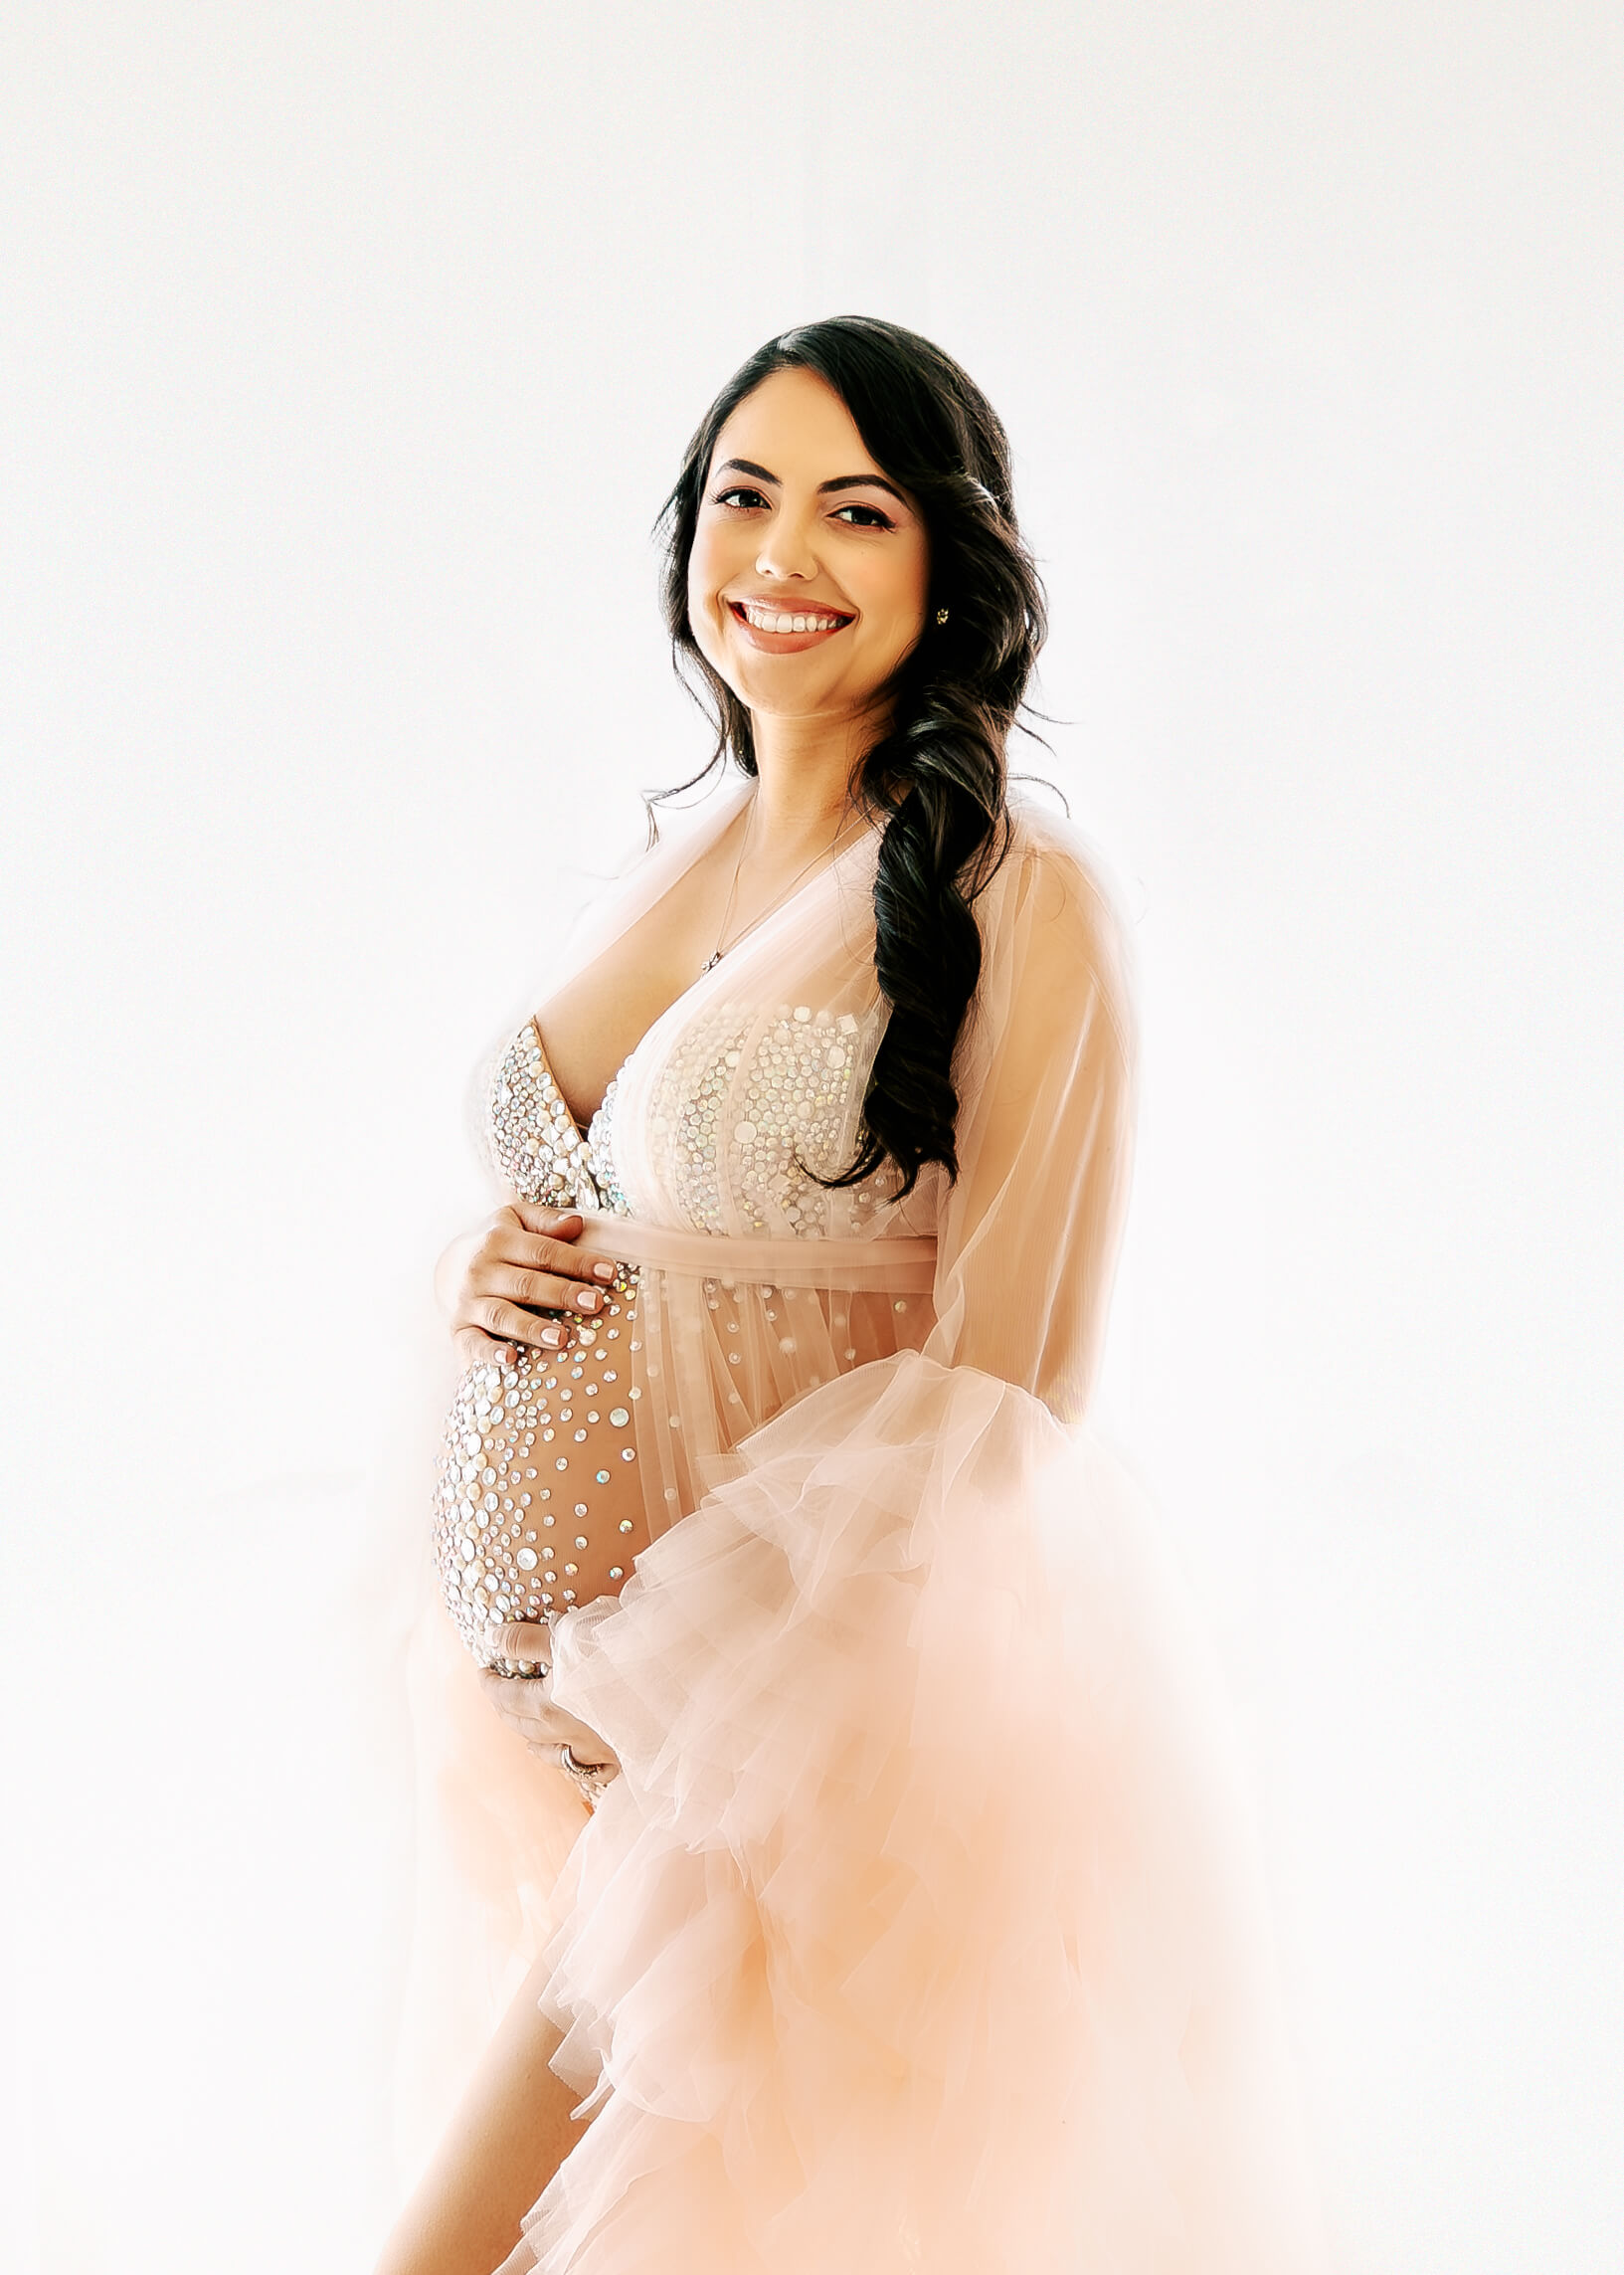 Gorgeous expectant Mama posed smiling and wearing jeweled bodysuit and ruffled robe by Ashley Nicole.